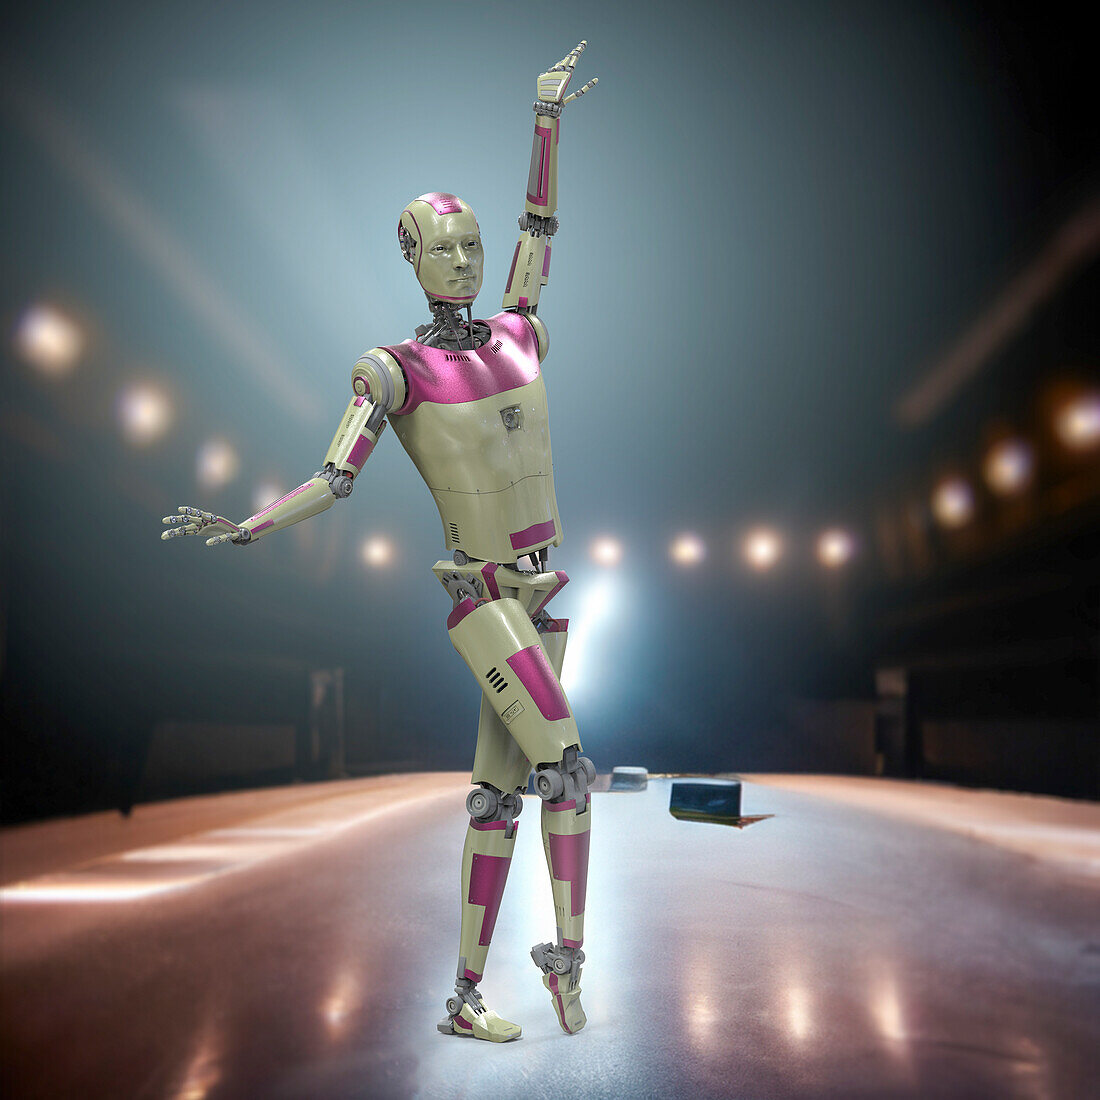 Robot dancing, illustration